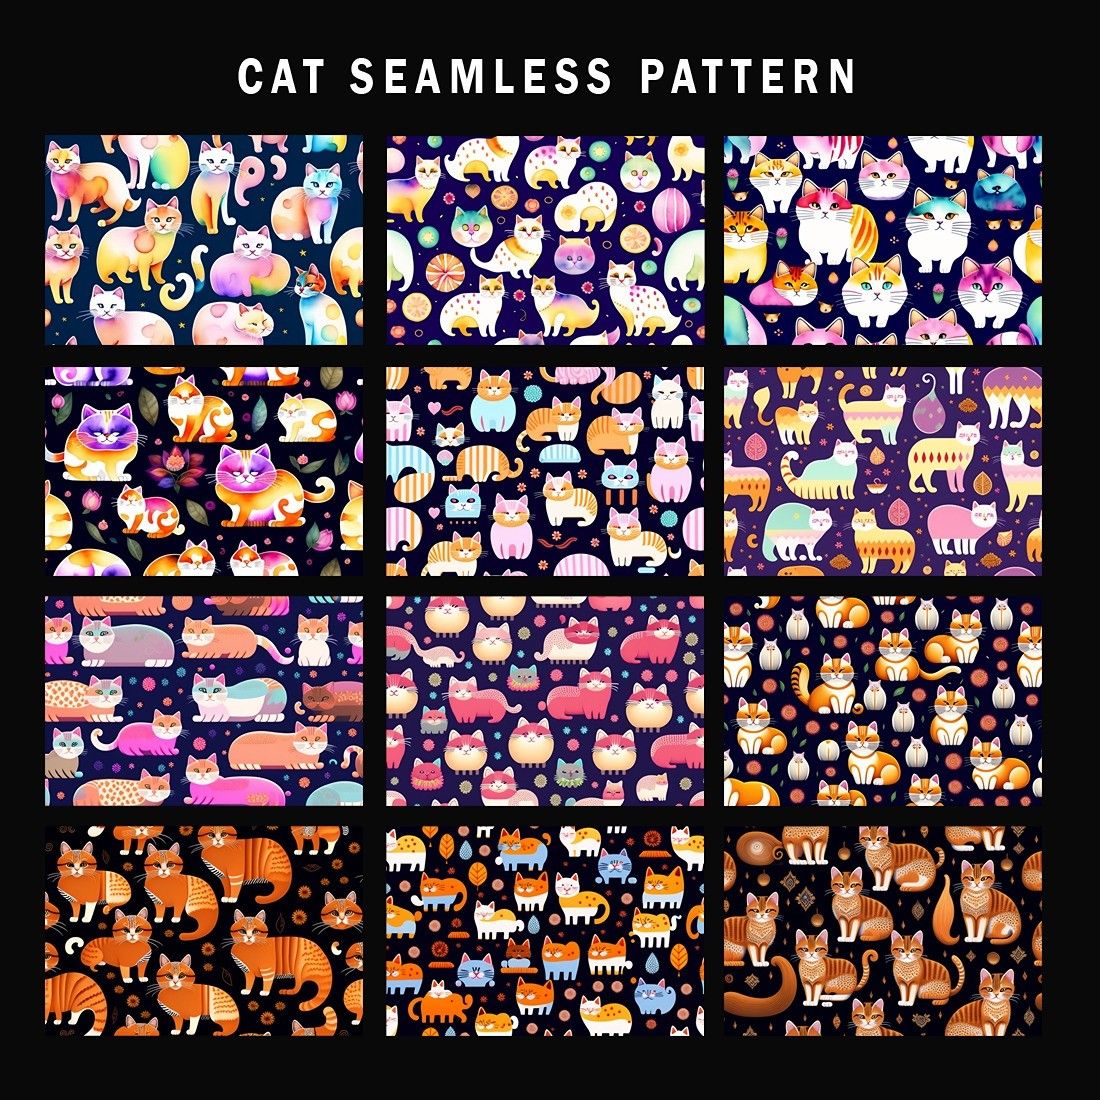 Cate - Seamless pattern, cat background pattern, cat colorful background pattern cover image.